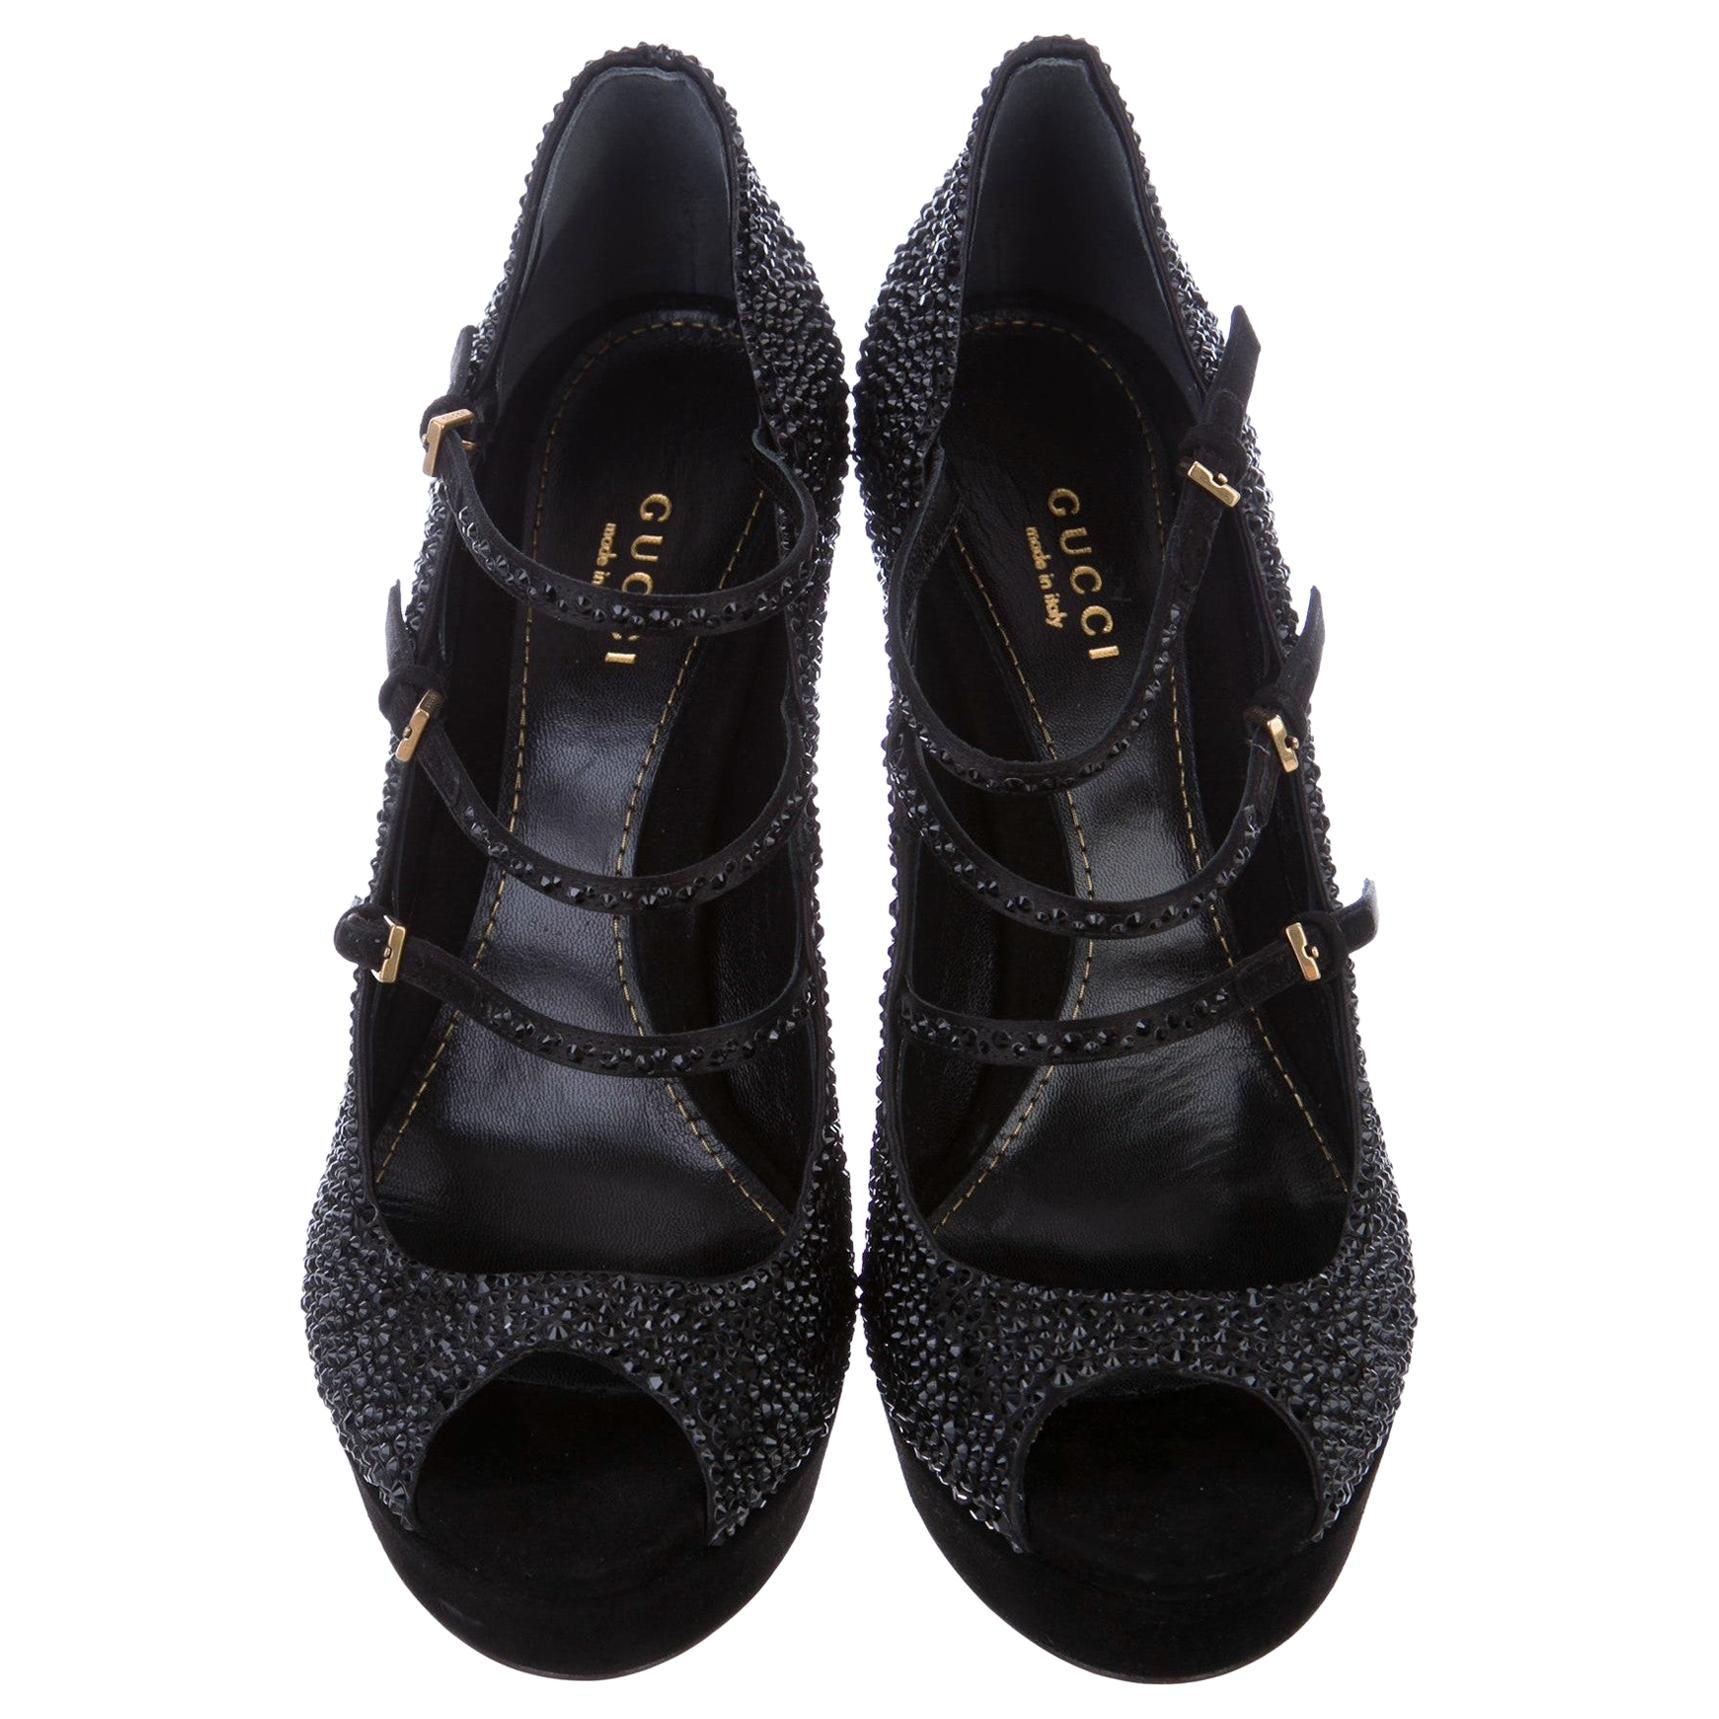 Brand New
Gucci Crystal Suede Leather Platform Heels
$2150
Size: 38
Black
Heel 5.25